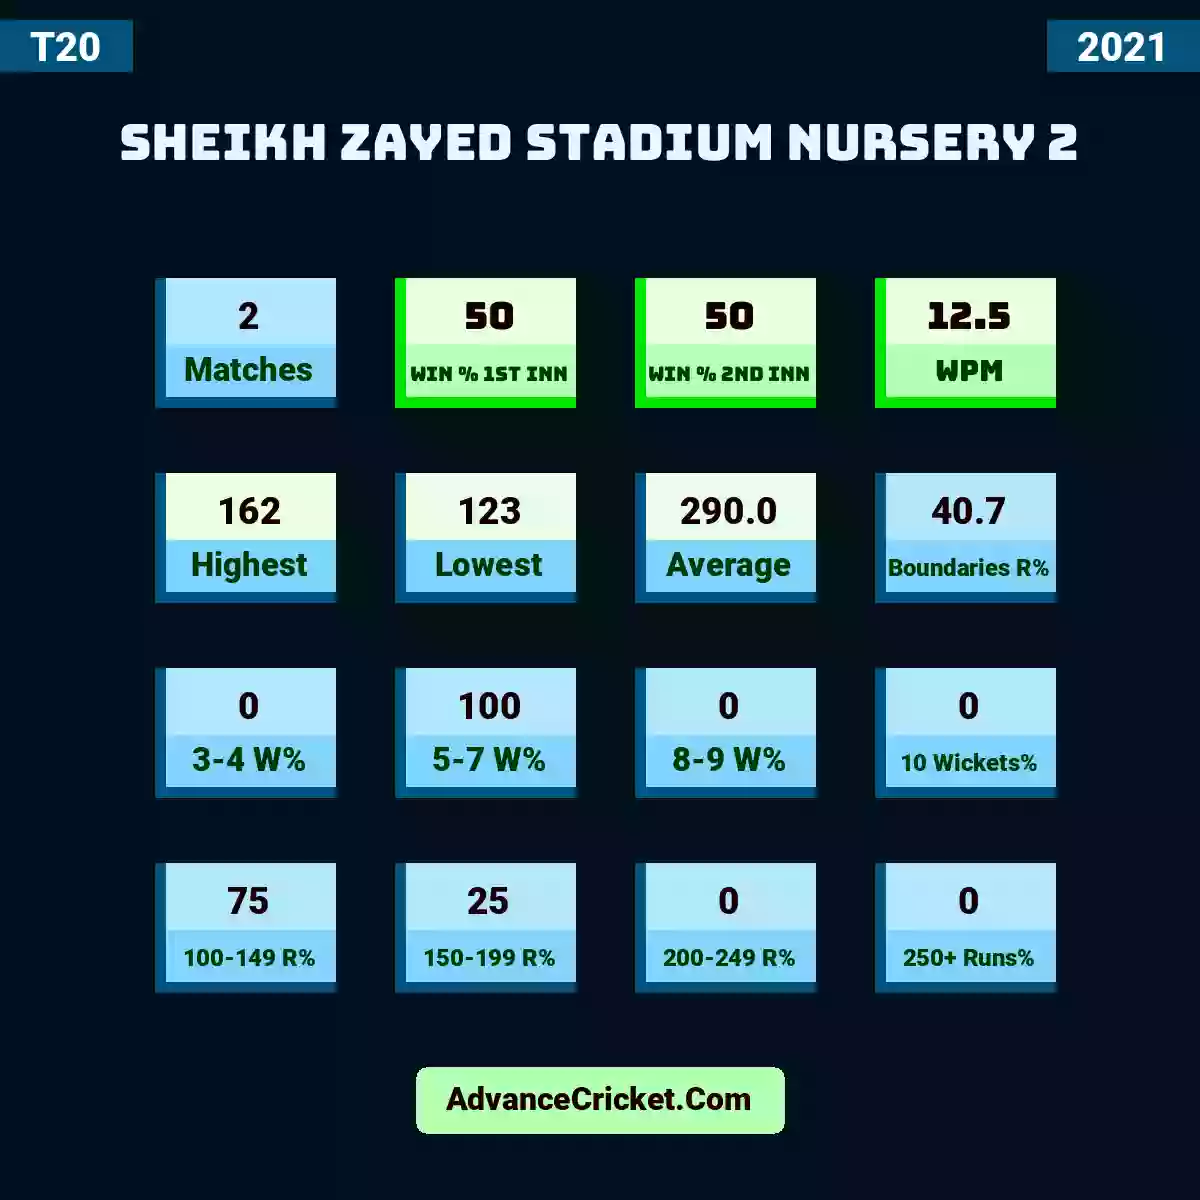 Image showing Sheikh Zayed Stadium Nursery 2 with Matches: 2, Win % 1st Inn: 50, Win % 2nd Inn: 50, WPM: 12.5, Highest: 162, Lowest: 123, Average: 290.0, Boundaries R%: 40.7, 3-4 W%: 0, 5-7 W%: 100, 8-9 W%: 0, 10 Wickets%: 0, 100-149 R%: 75, 150-199 R%: 25, 200-249 R%: 0, 250+ Runs%: 0.